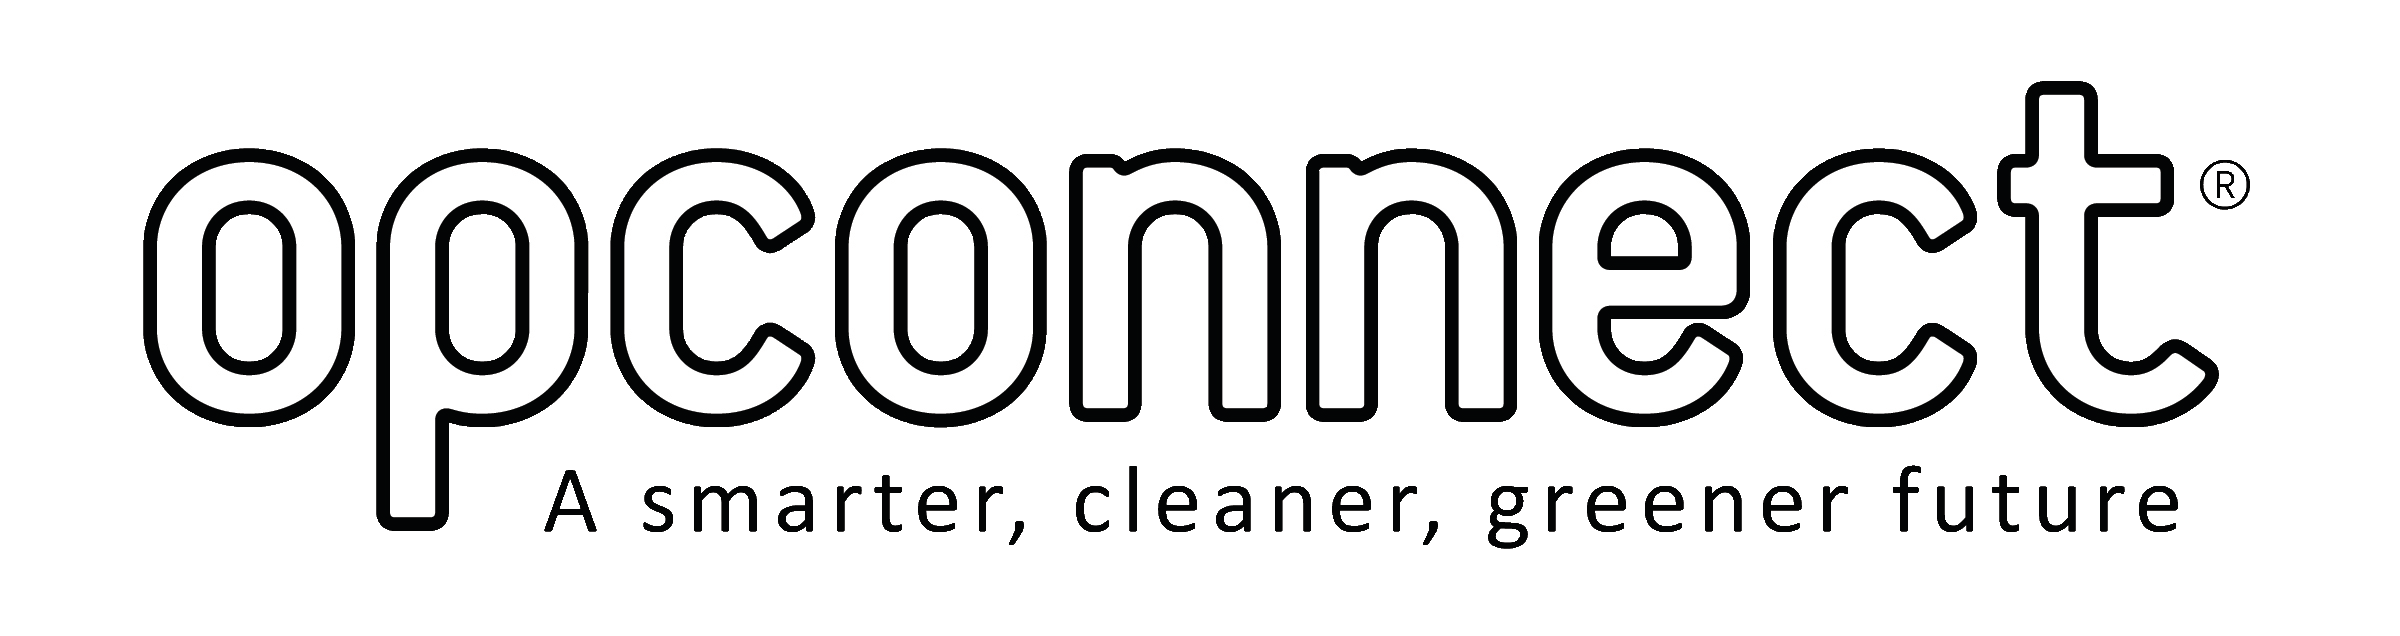 OpConnect-logo